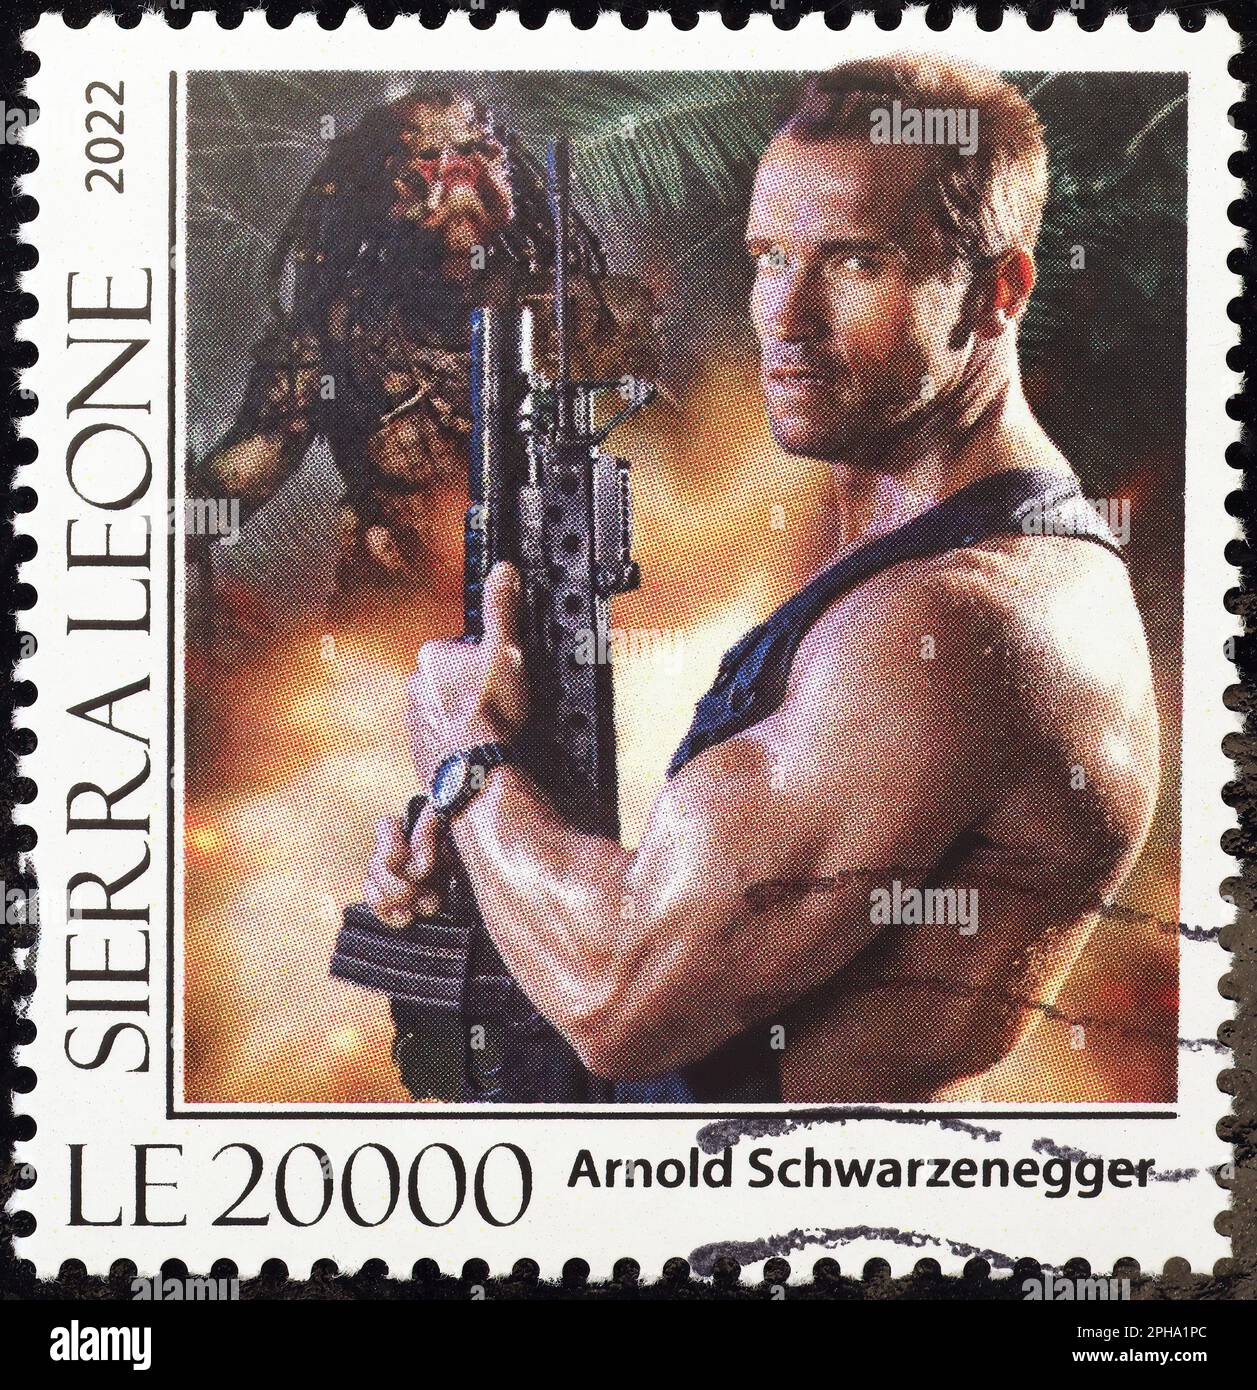 Arnold Schwarzenegger portrait on african postage stamp Stock Photo